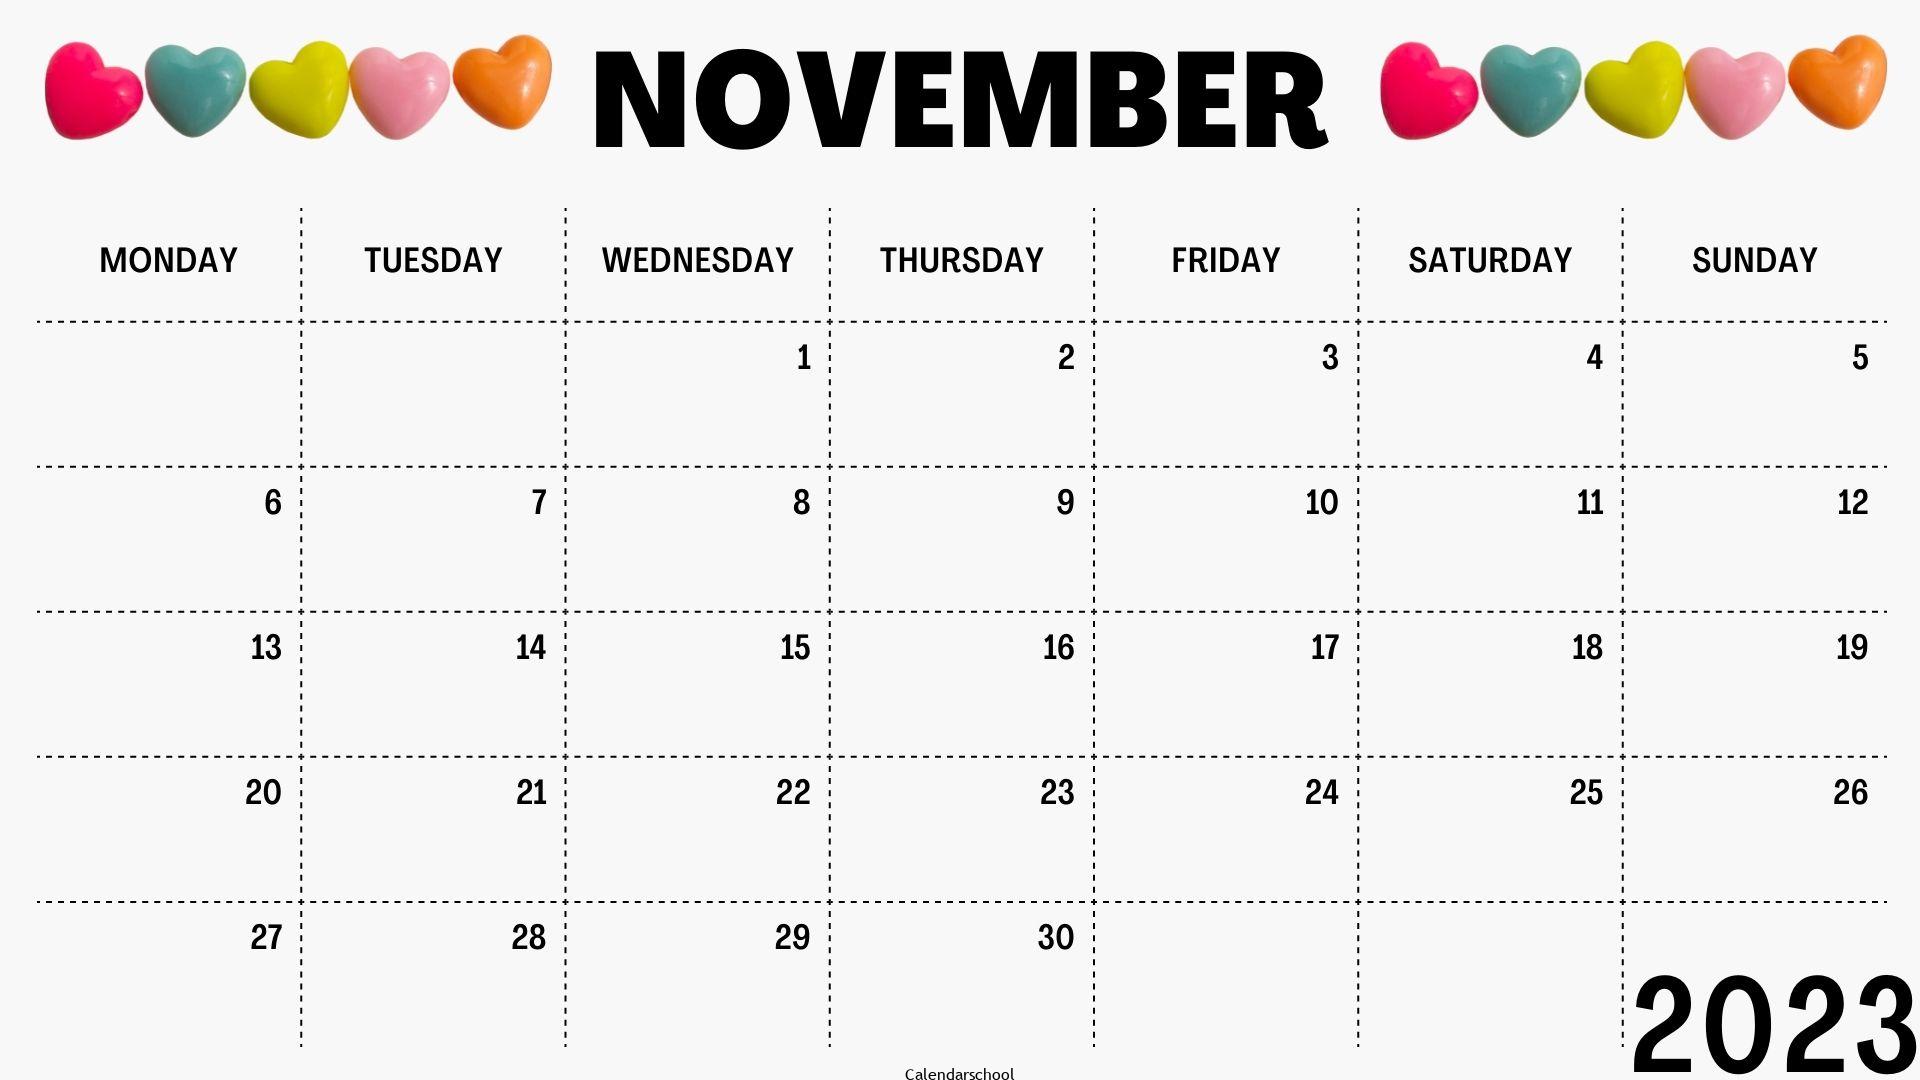 November 2023 Blank Calendar Coloring Pages